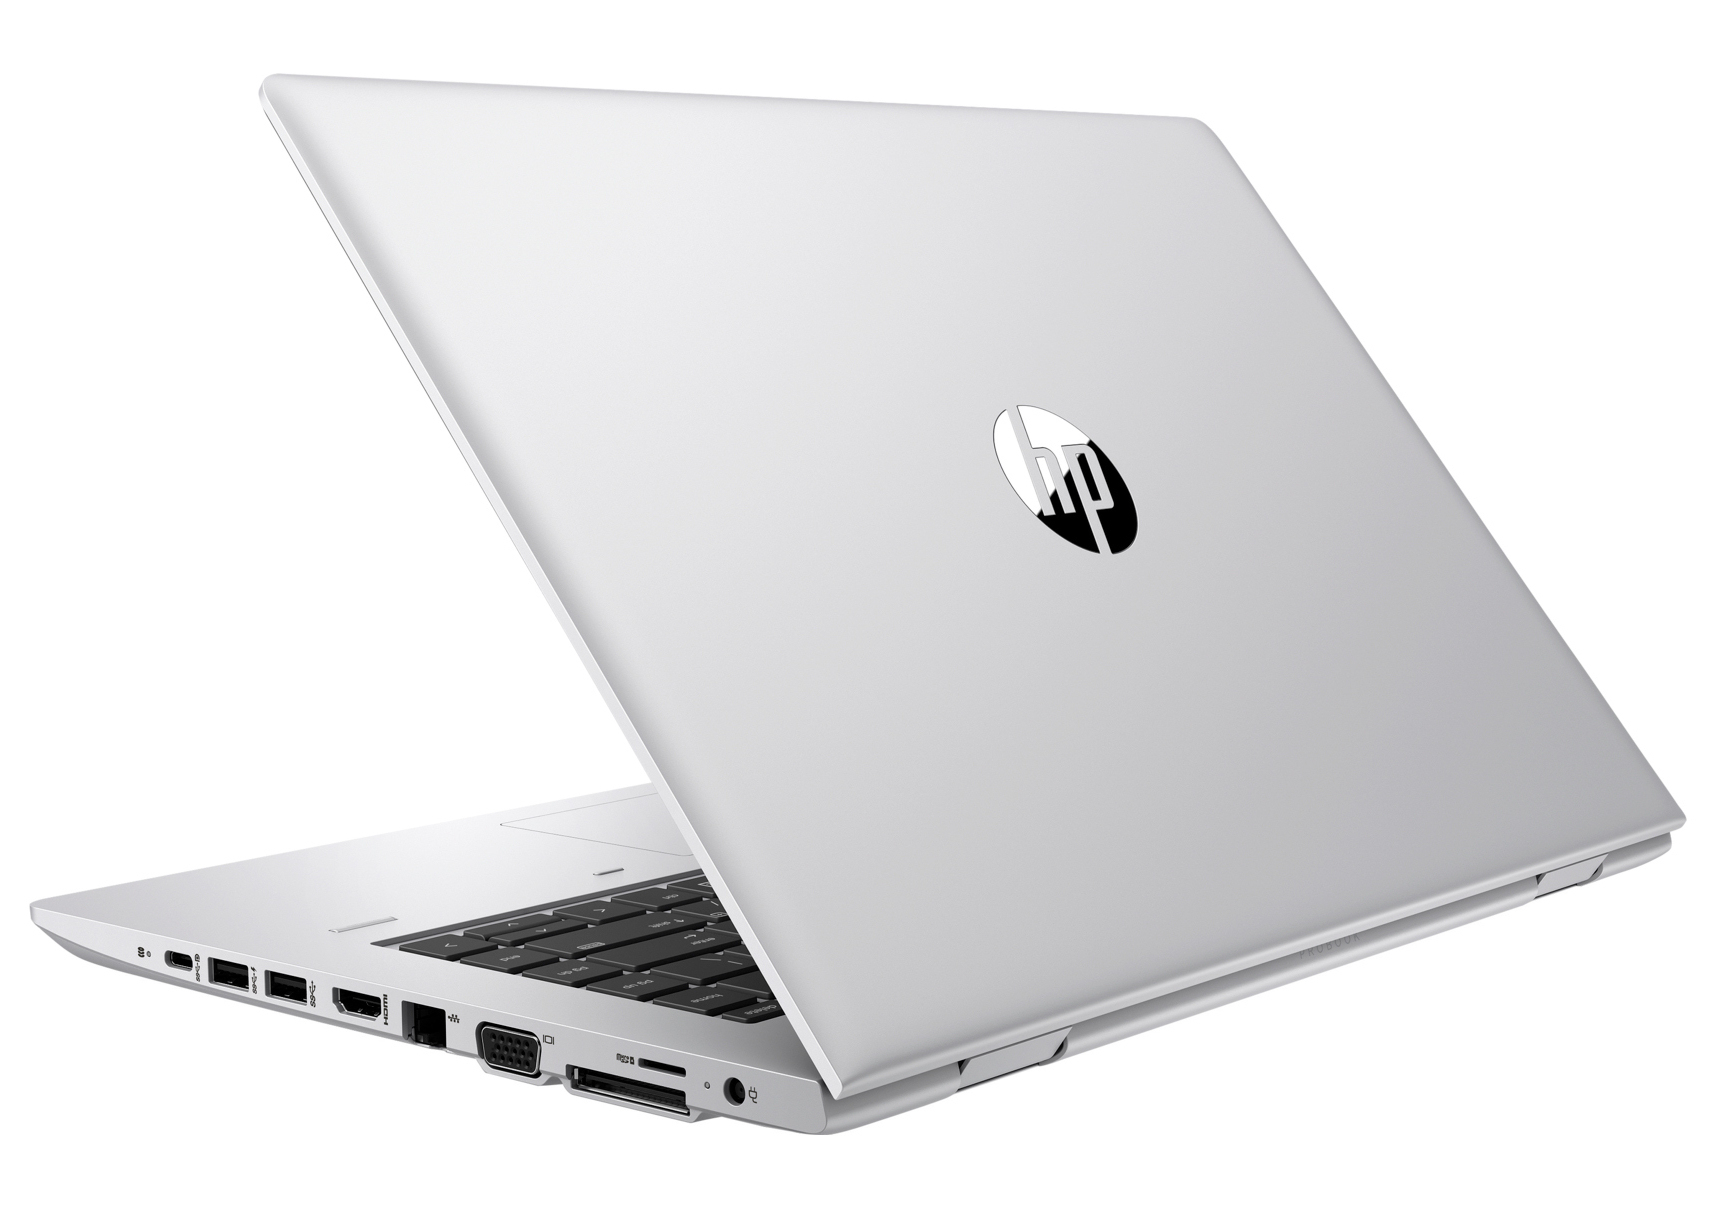 HP ProBook 645 G4 AMD Ryzen 3 Pro 2300U/8GB/240GBB-1